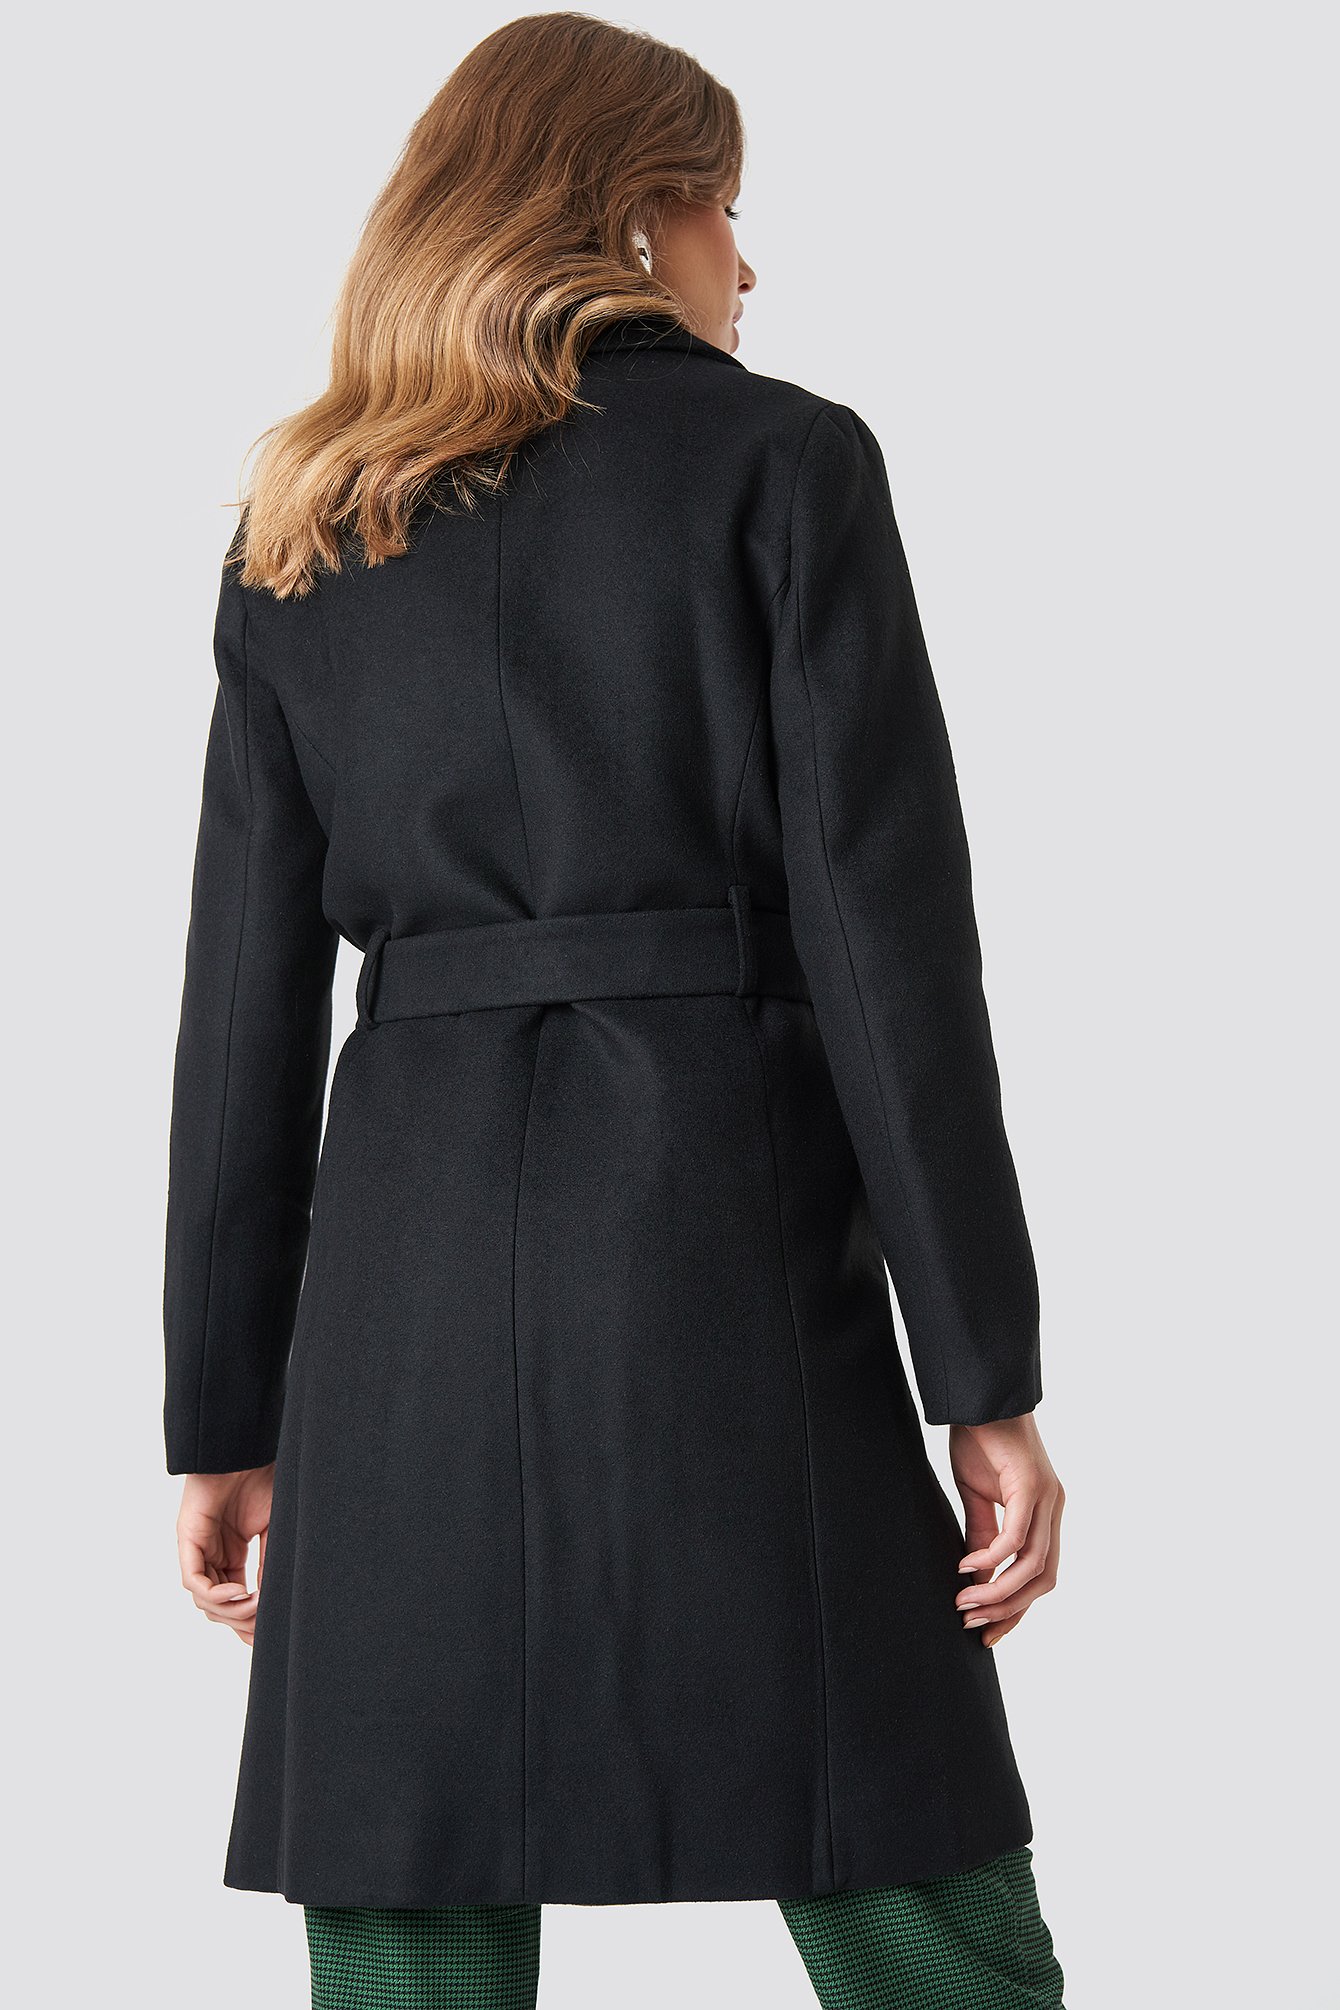 Black Arched Coat